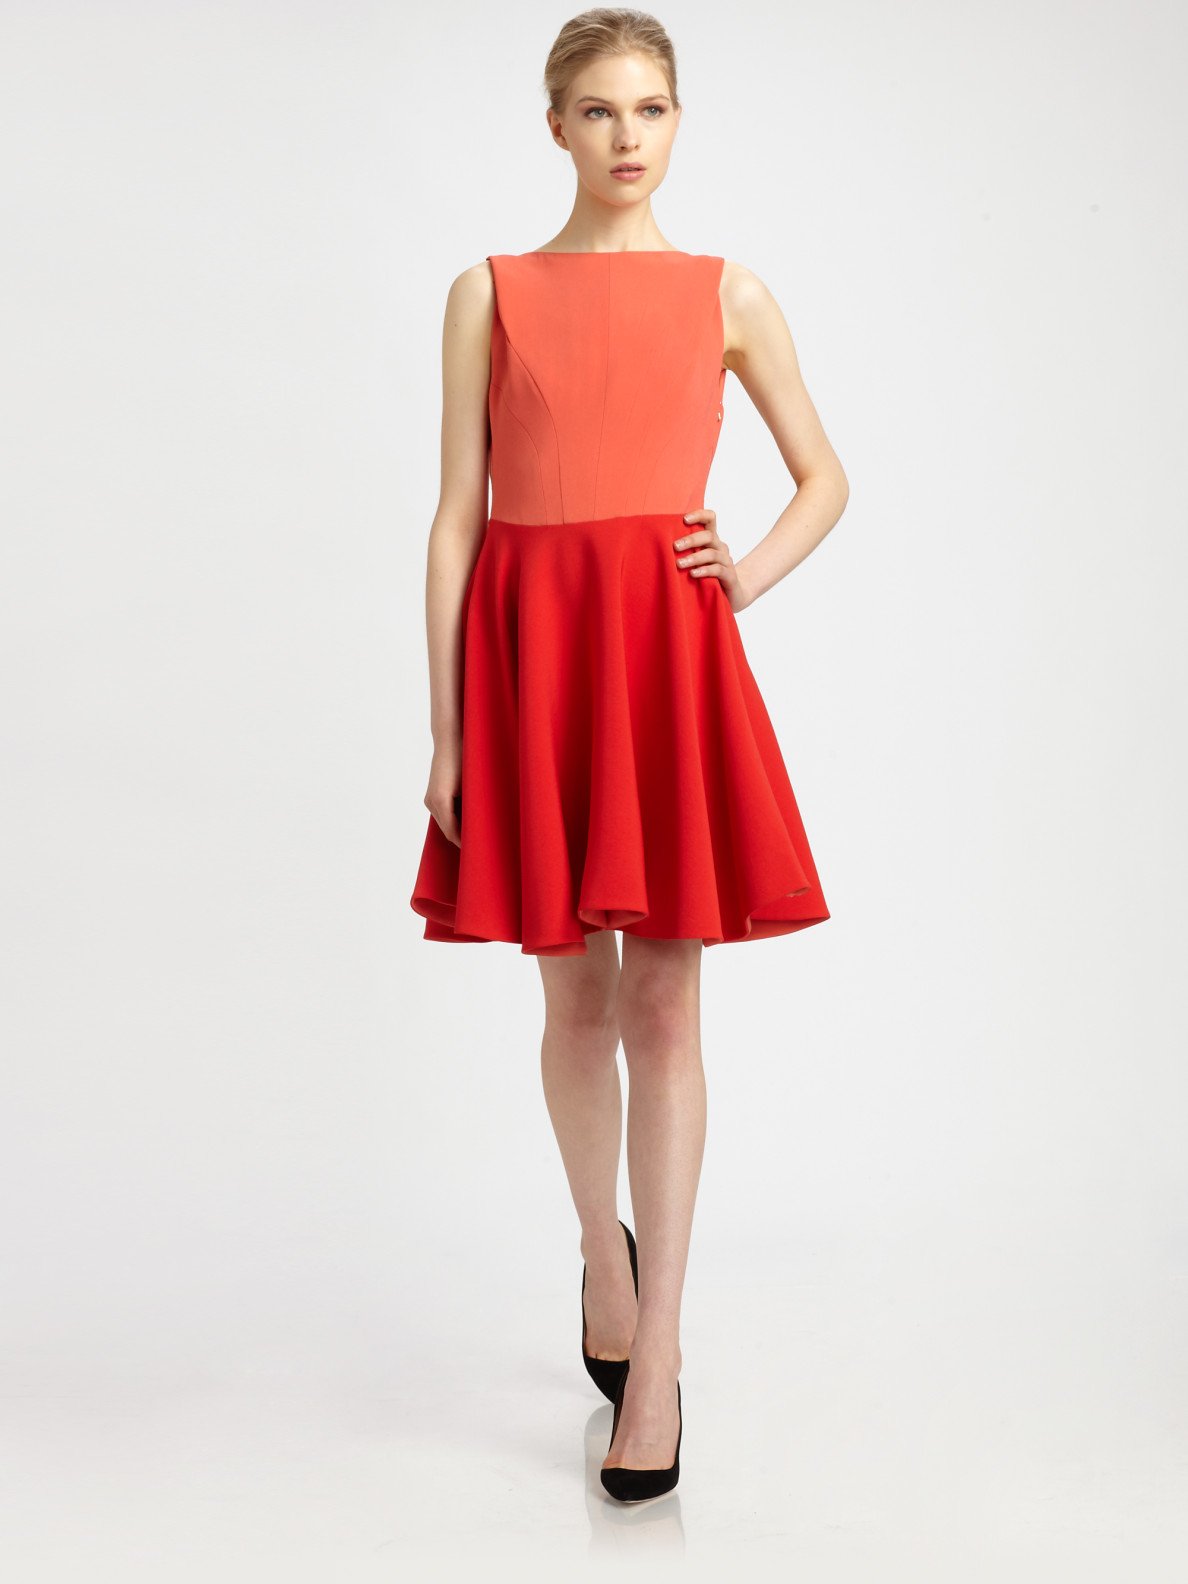 Lyst - Antonio Berardi Colorblock Dress in Red